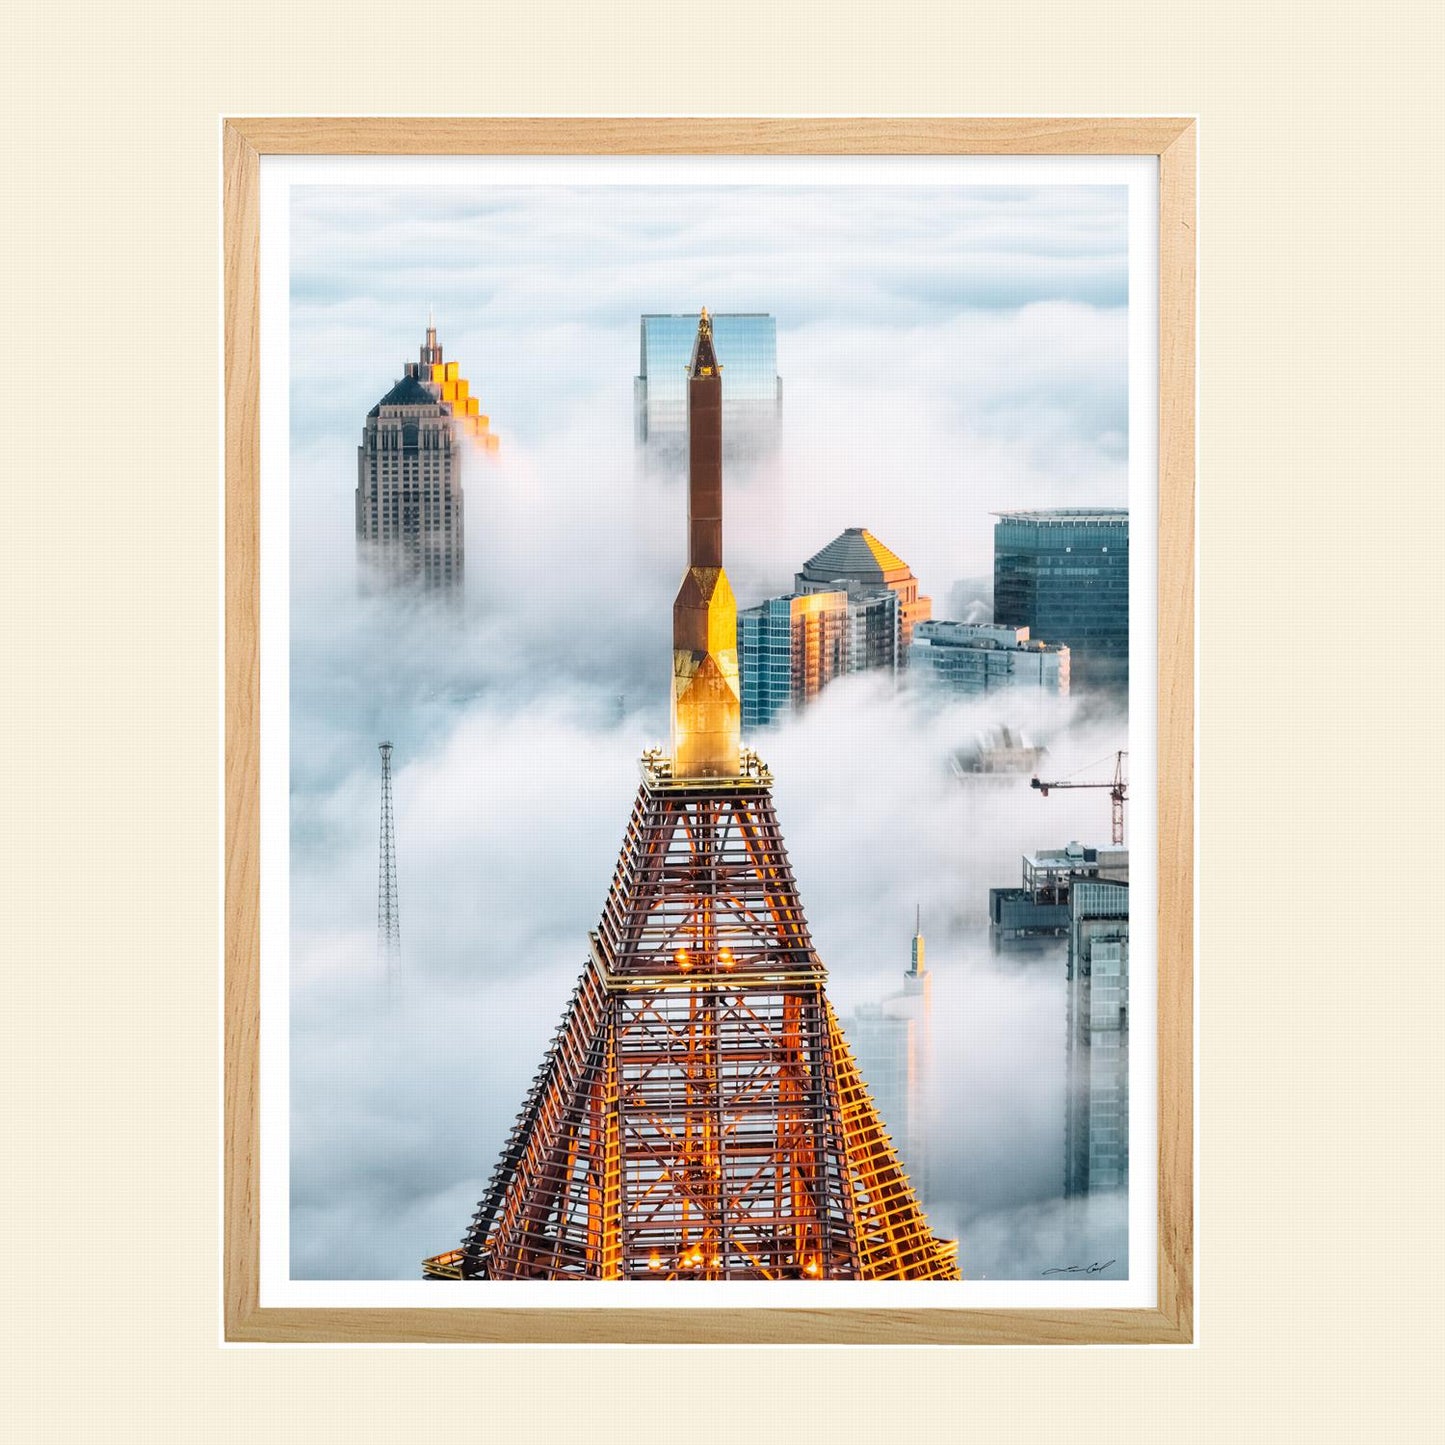 Luis Gaud - "Atlanta in the Clouds"